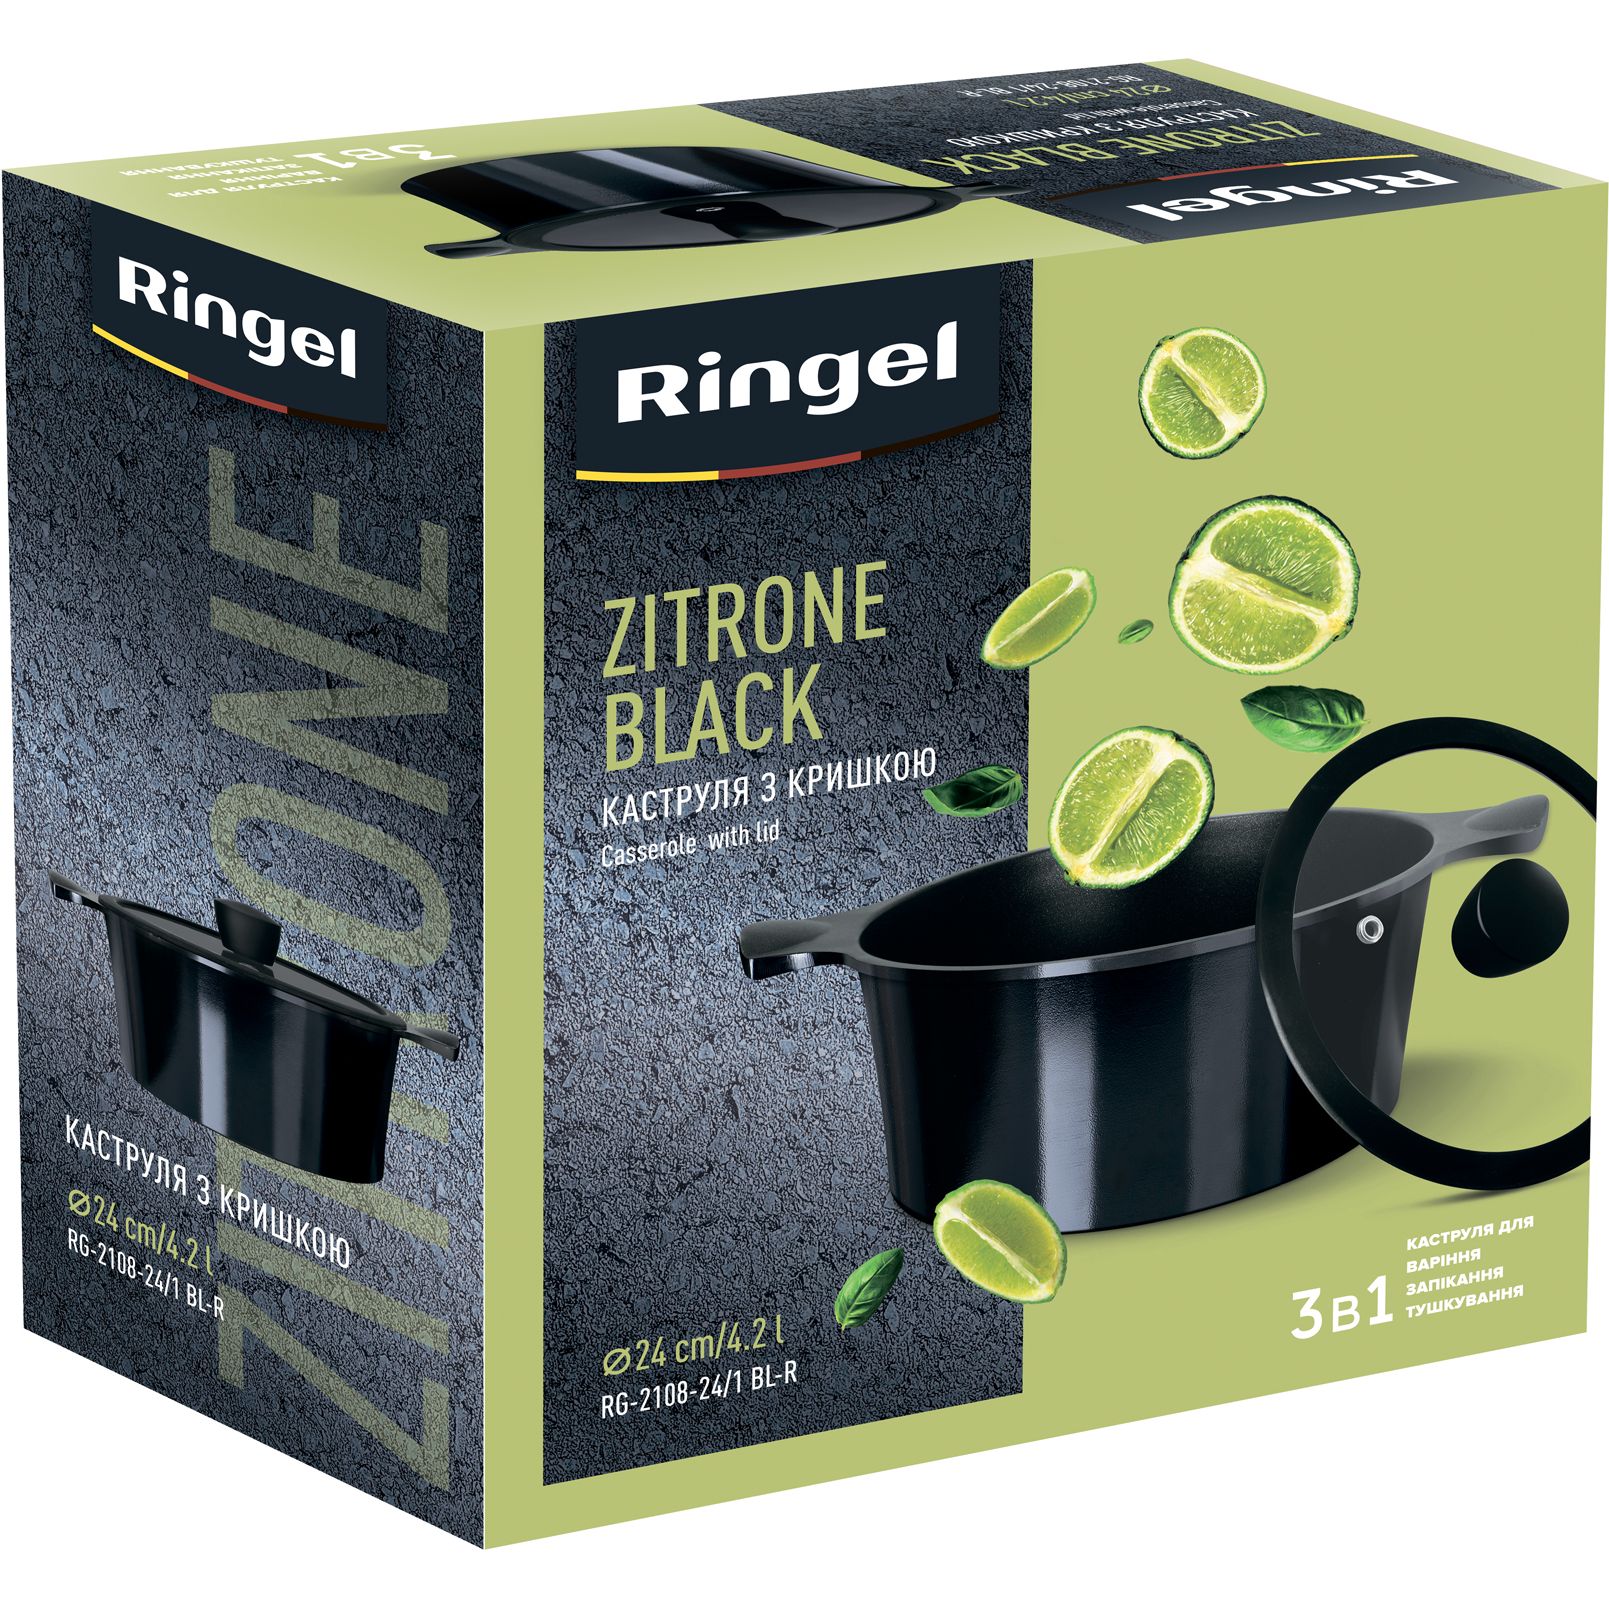 Кастрюля Ringel Zitrone Black, с крышкой, 24 см, 4,2 л, черный (RG-2108-24/1 BL-R) - фото 7